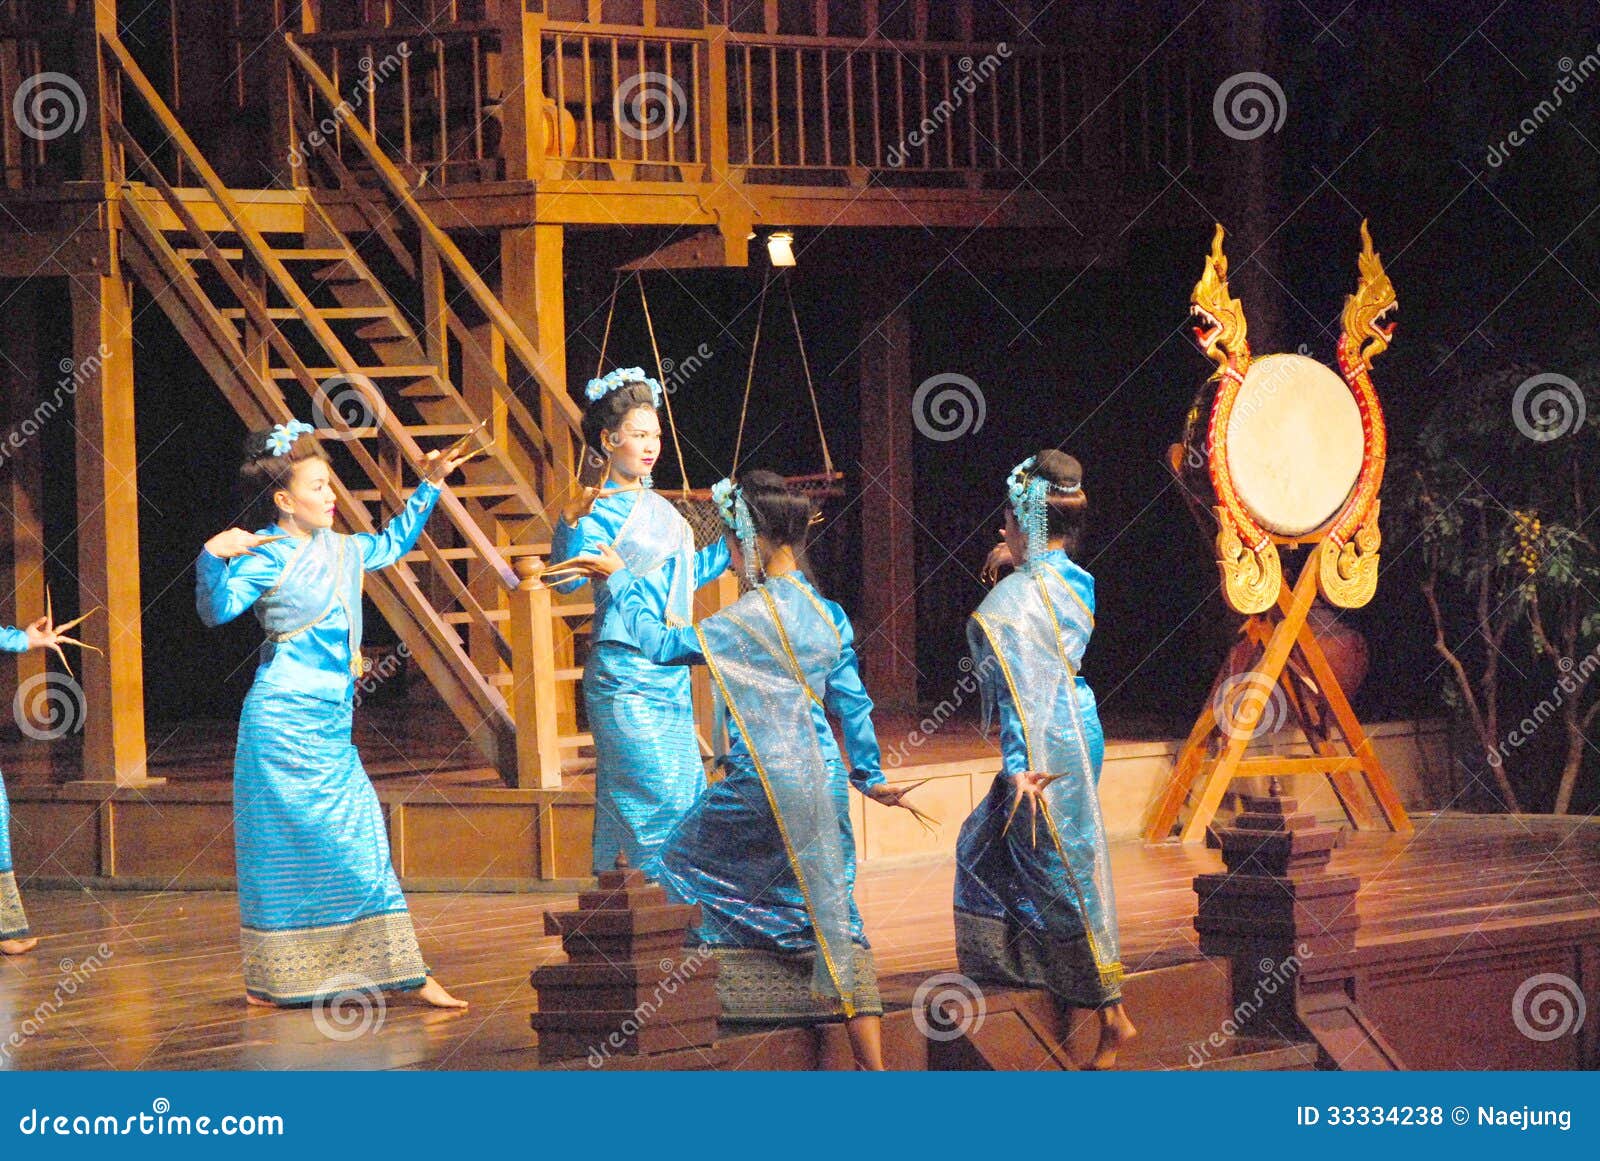 Thai Nail Dance Editorial Stock Photo Image Of Illuminated 33334238